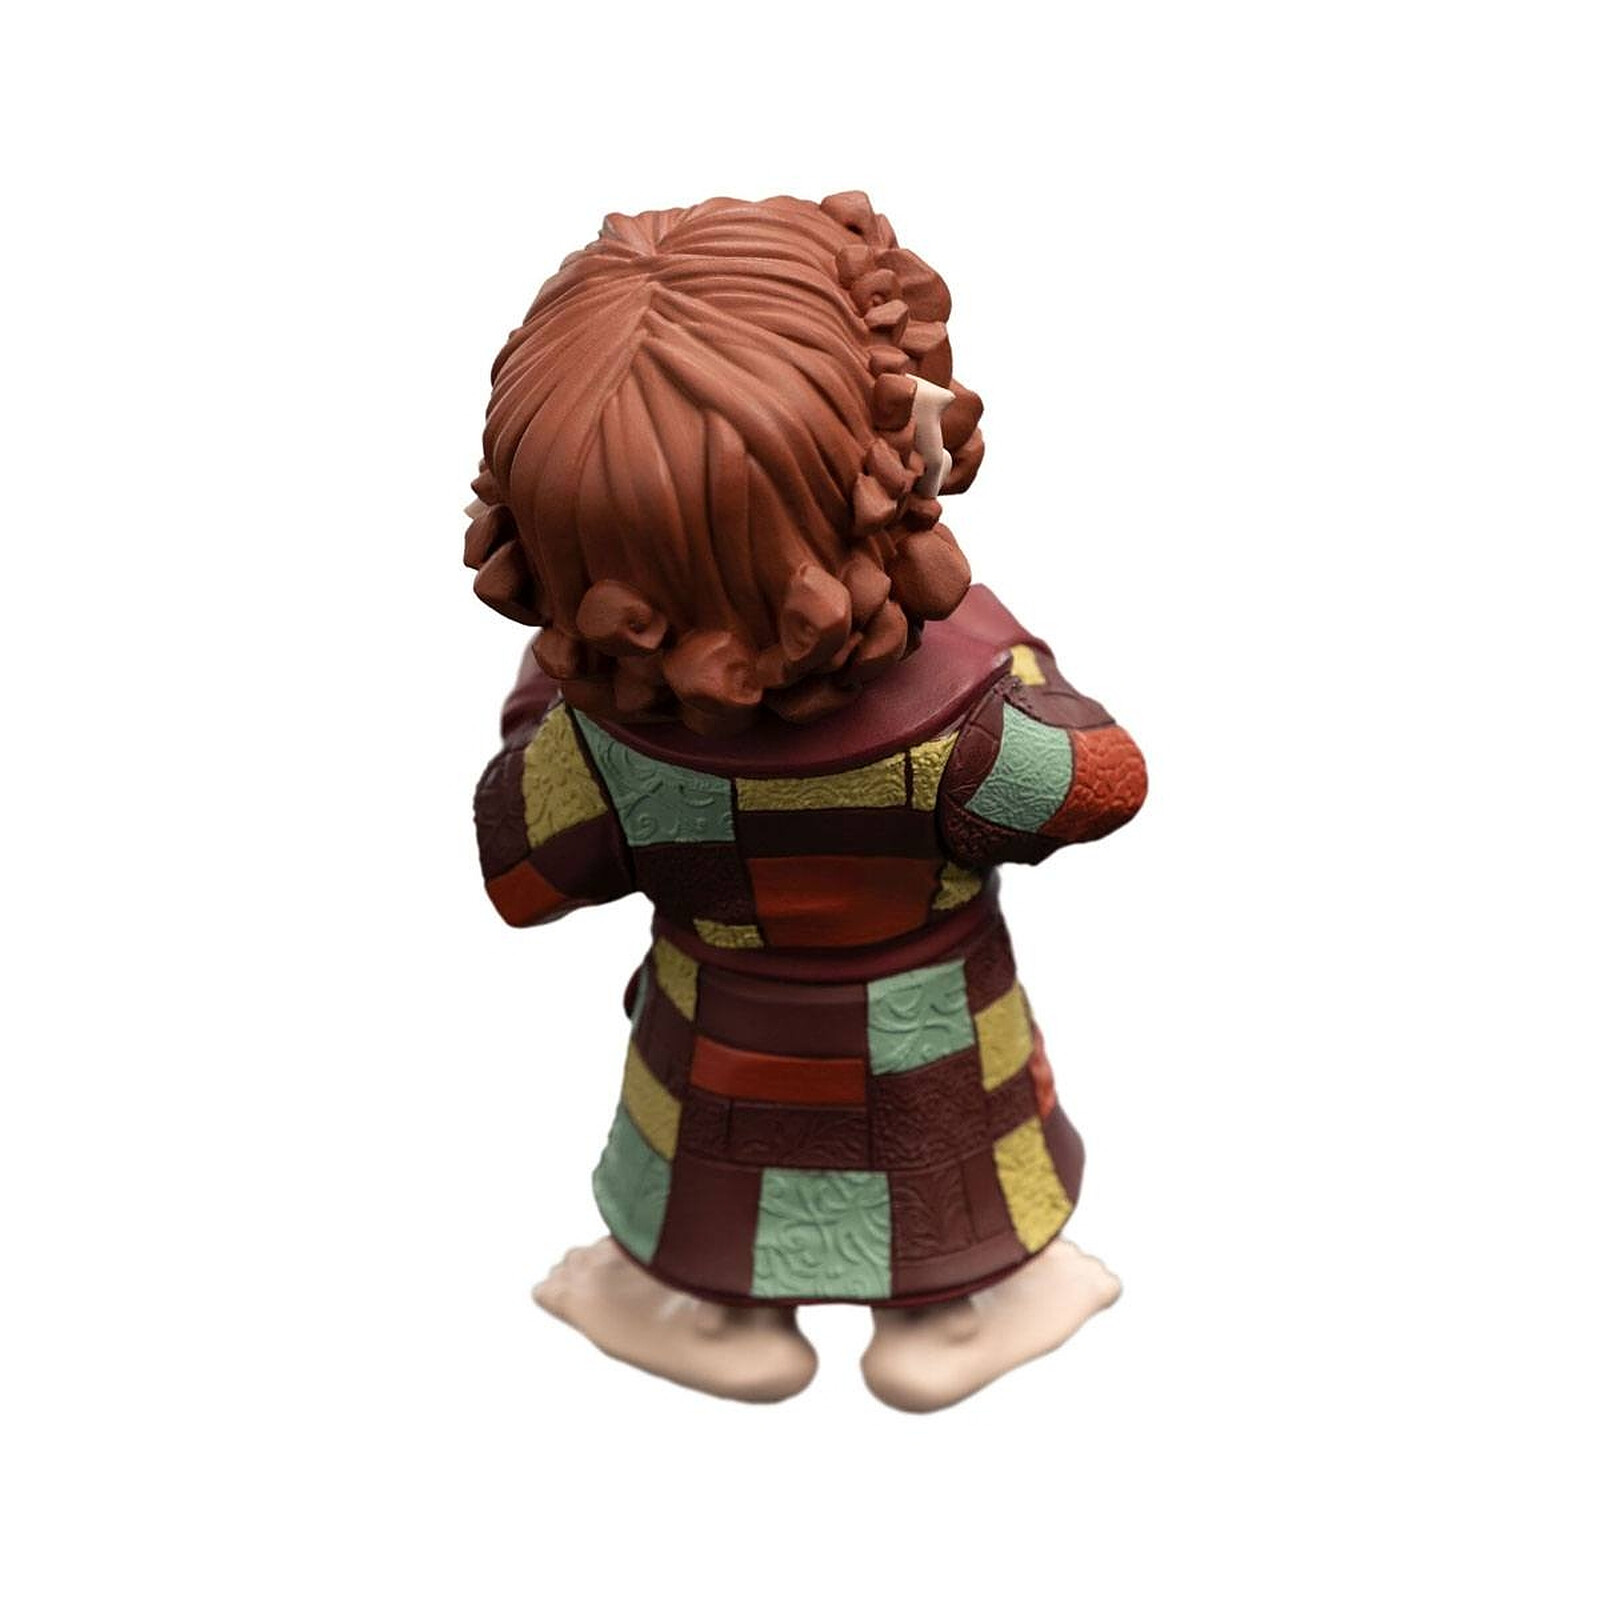 Le Hobbit - Figurine Mini Epics Bilbo Baggins Limited Edition 10